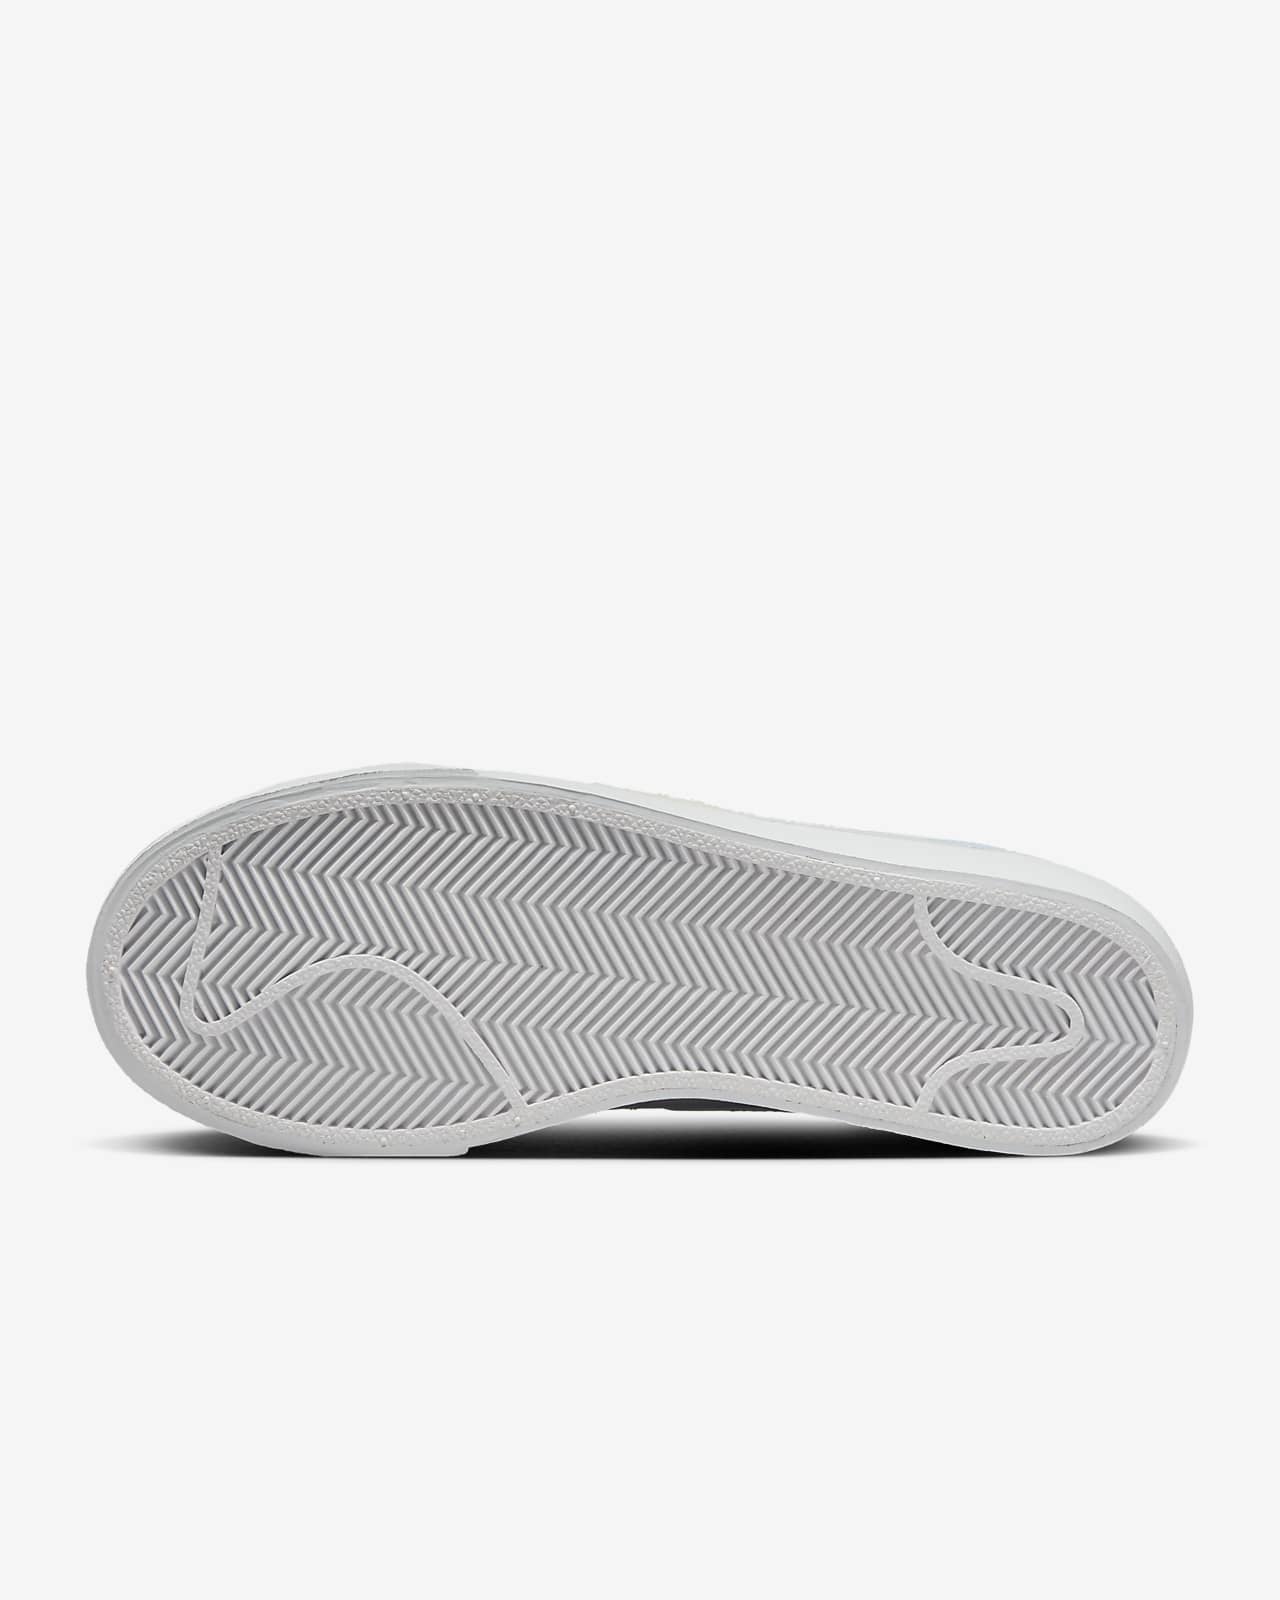 Calzado mujer Nike Low Platform. Nike.com